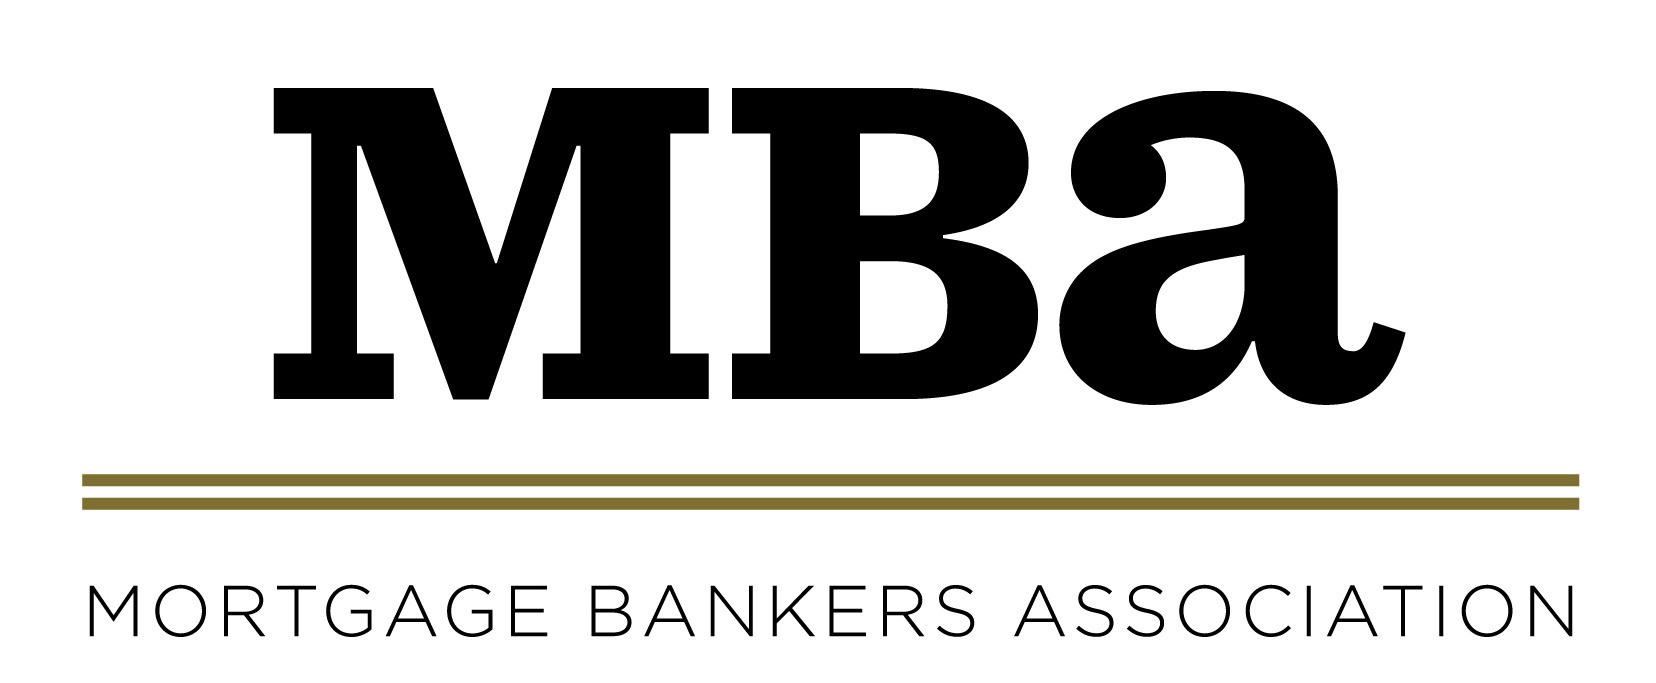 MBA mortgage bankers association logo